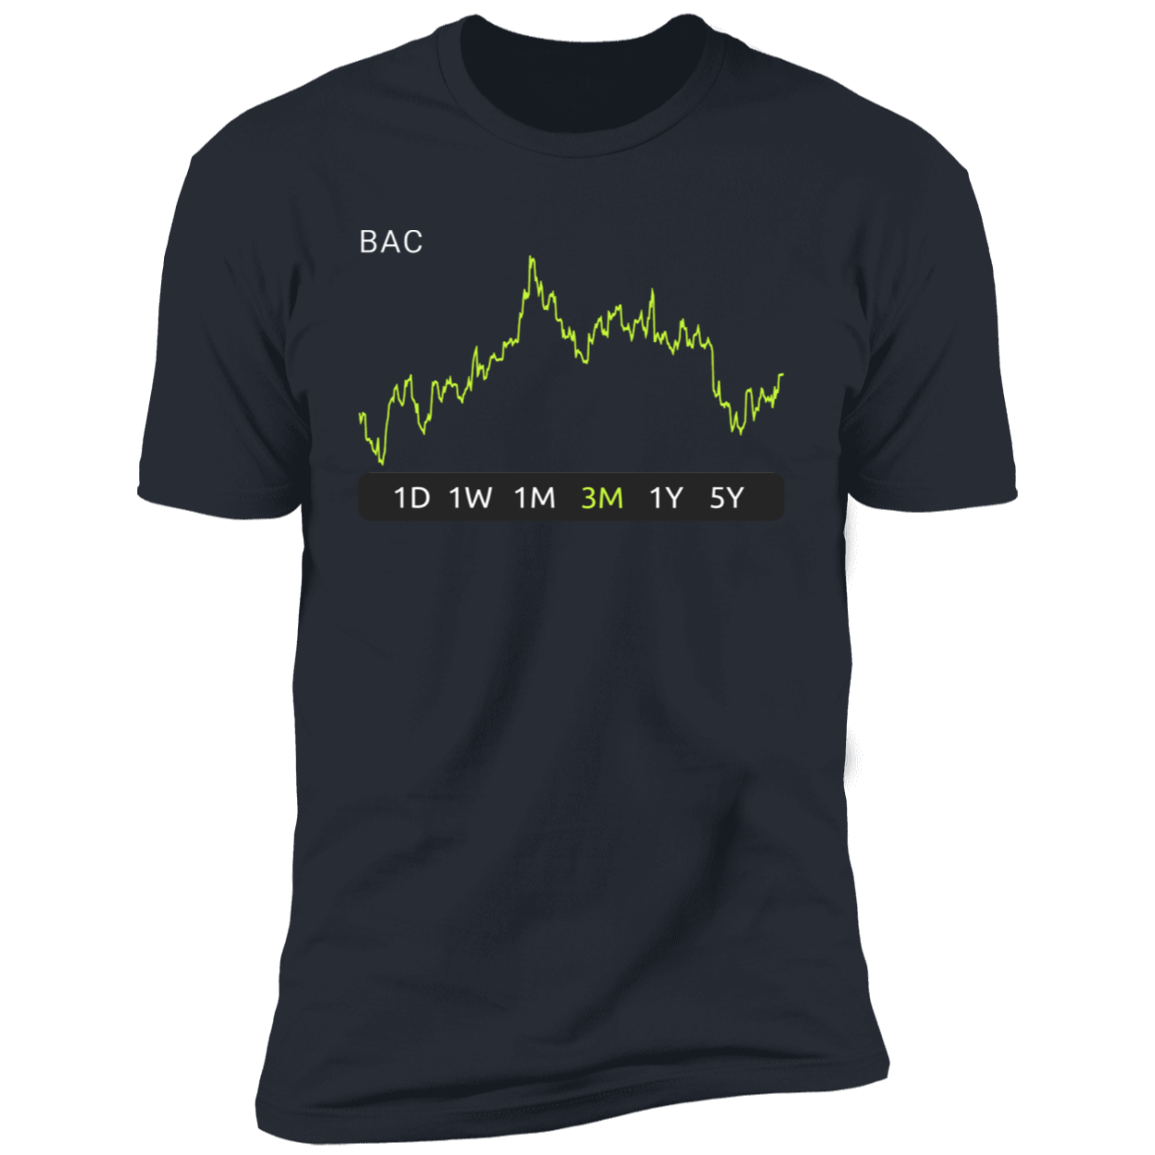 BAC Stock 3m Premium T-Shirt